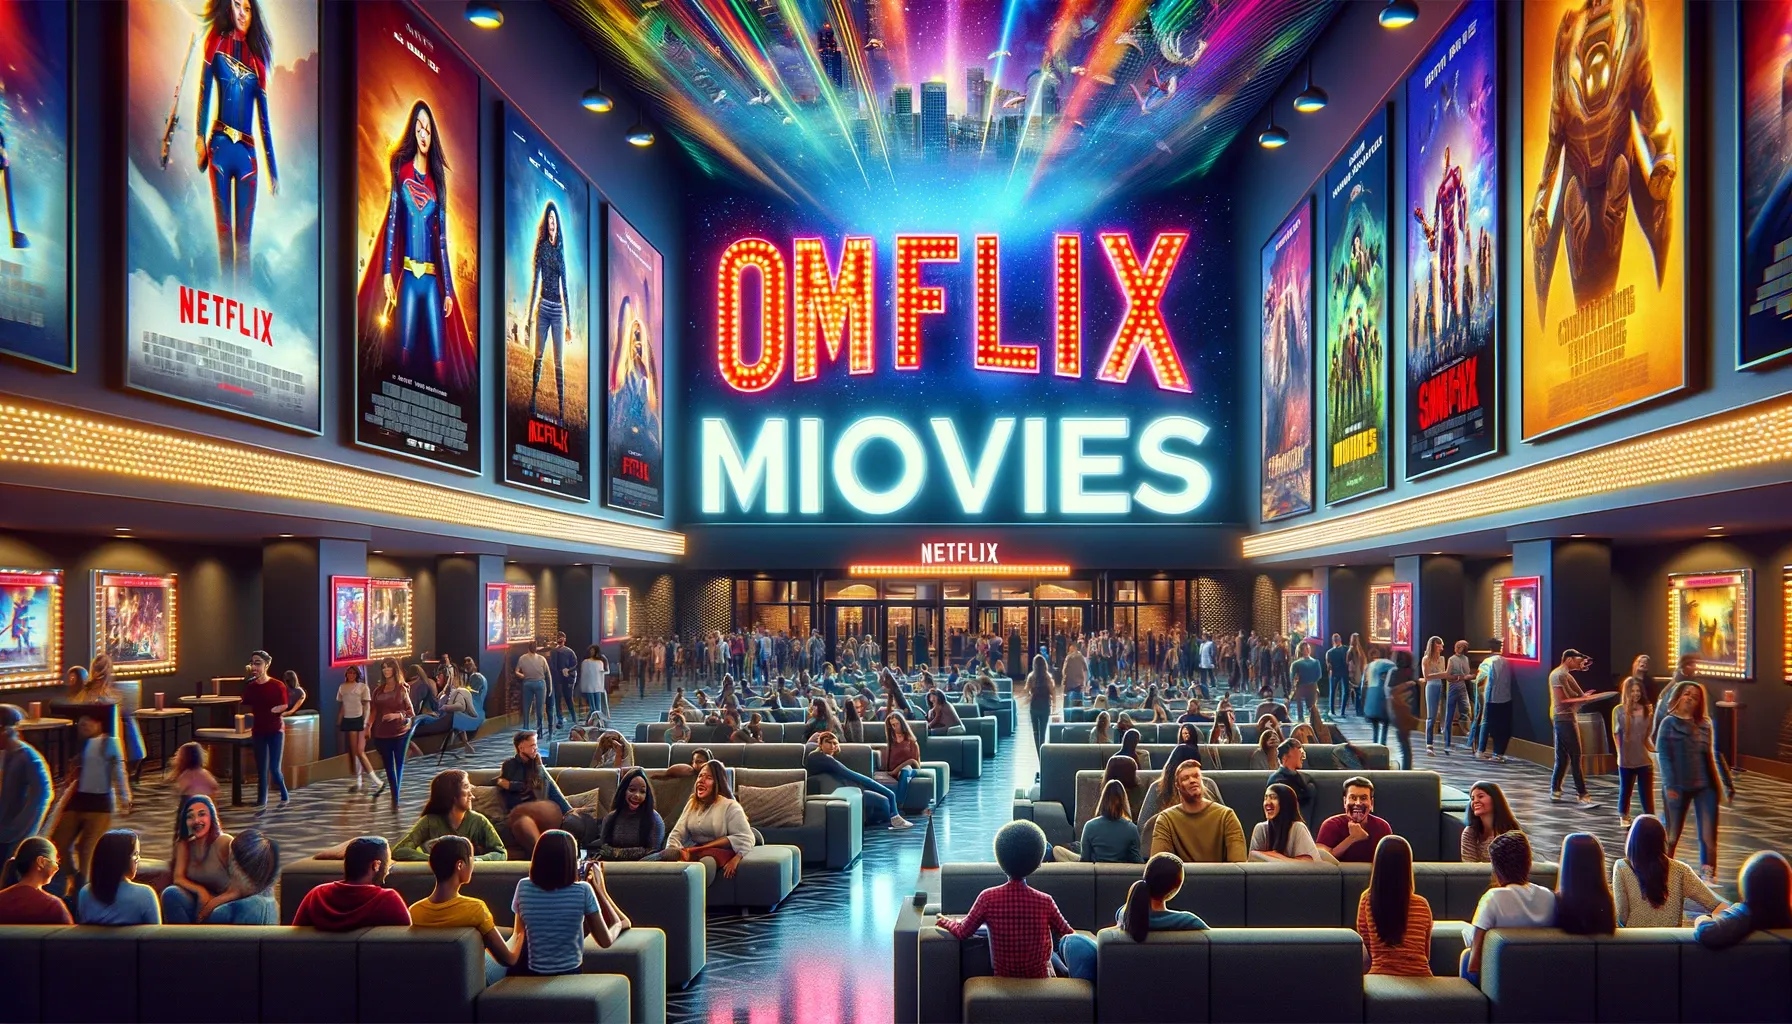 Omgflix Movies – A Comprehensive Overview